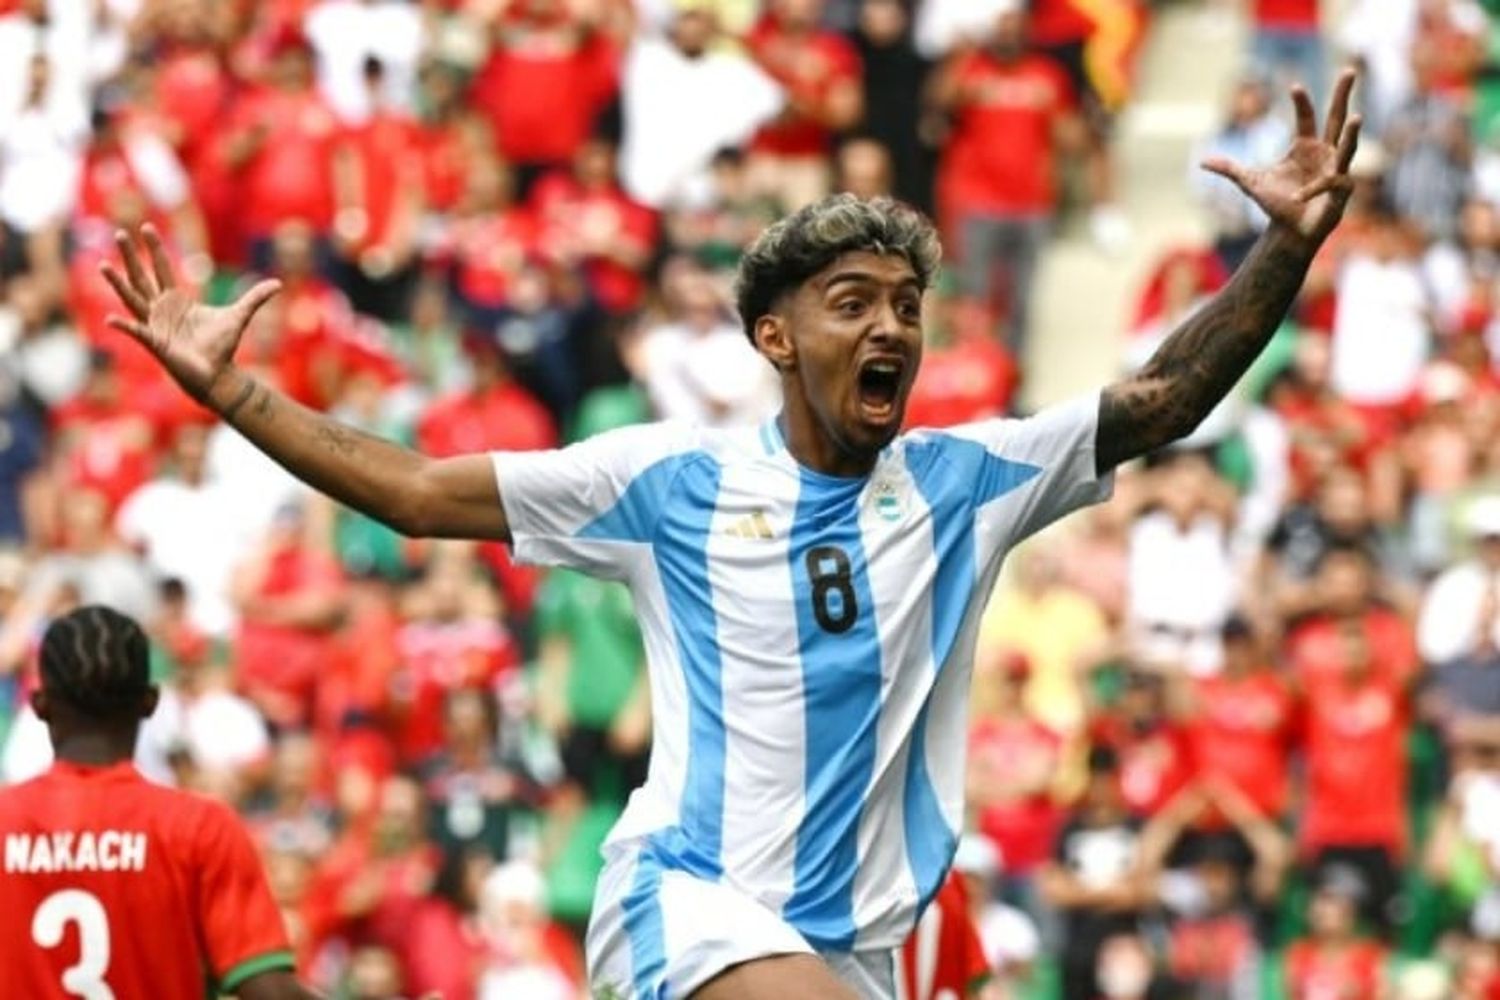 Casi dos horas después de los disturbios, el VAR anuló el gol de Medina, y Argentina perdió contra Marruecos